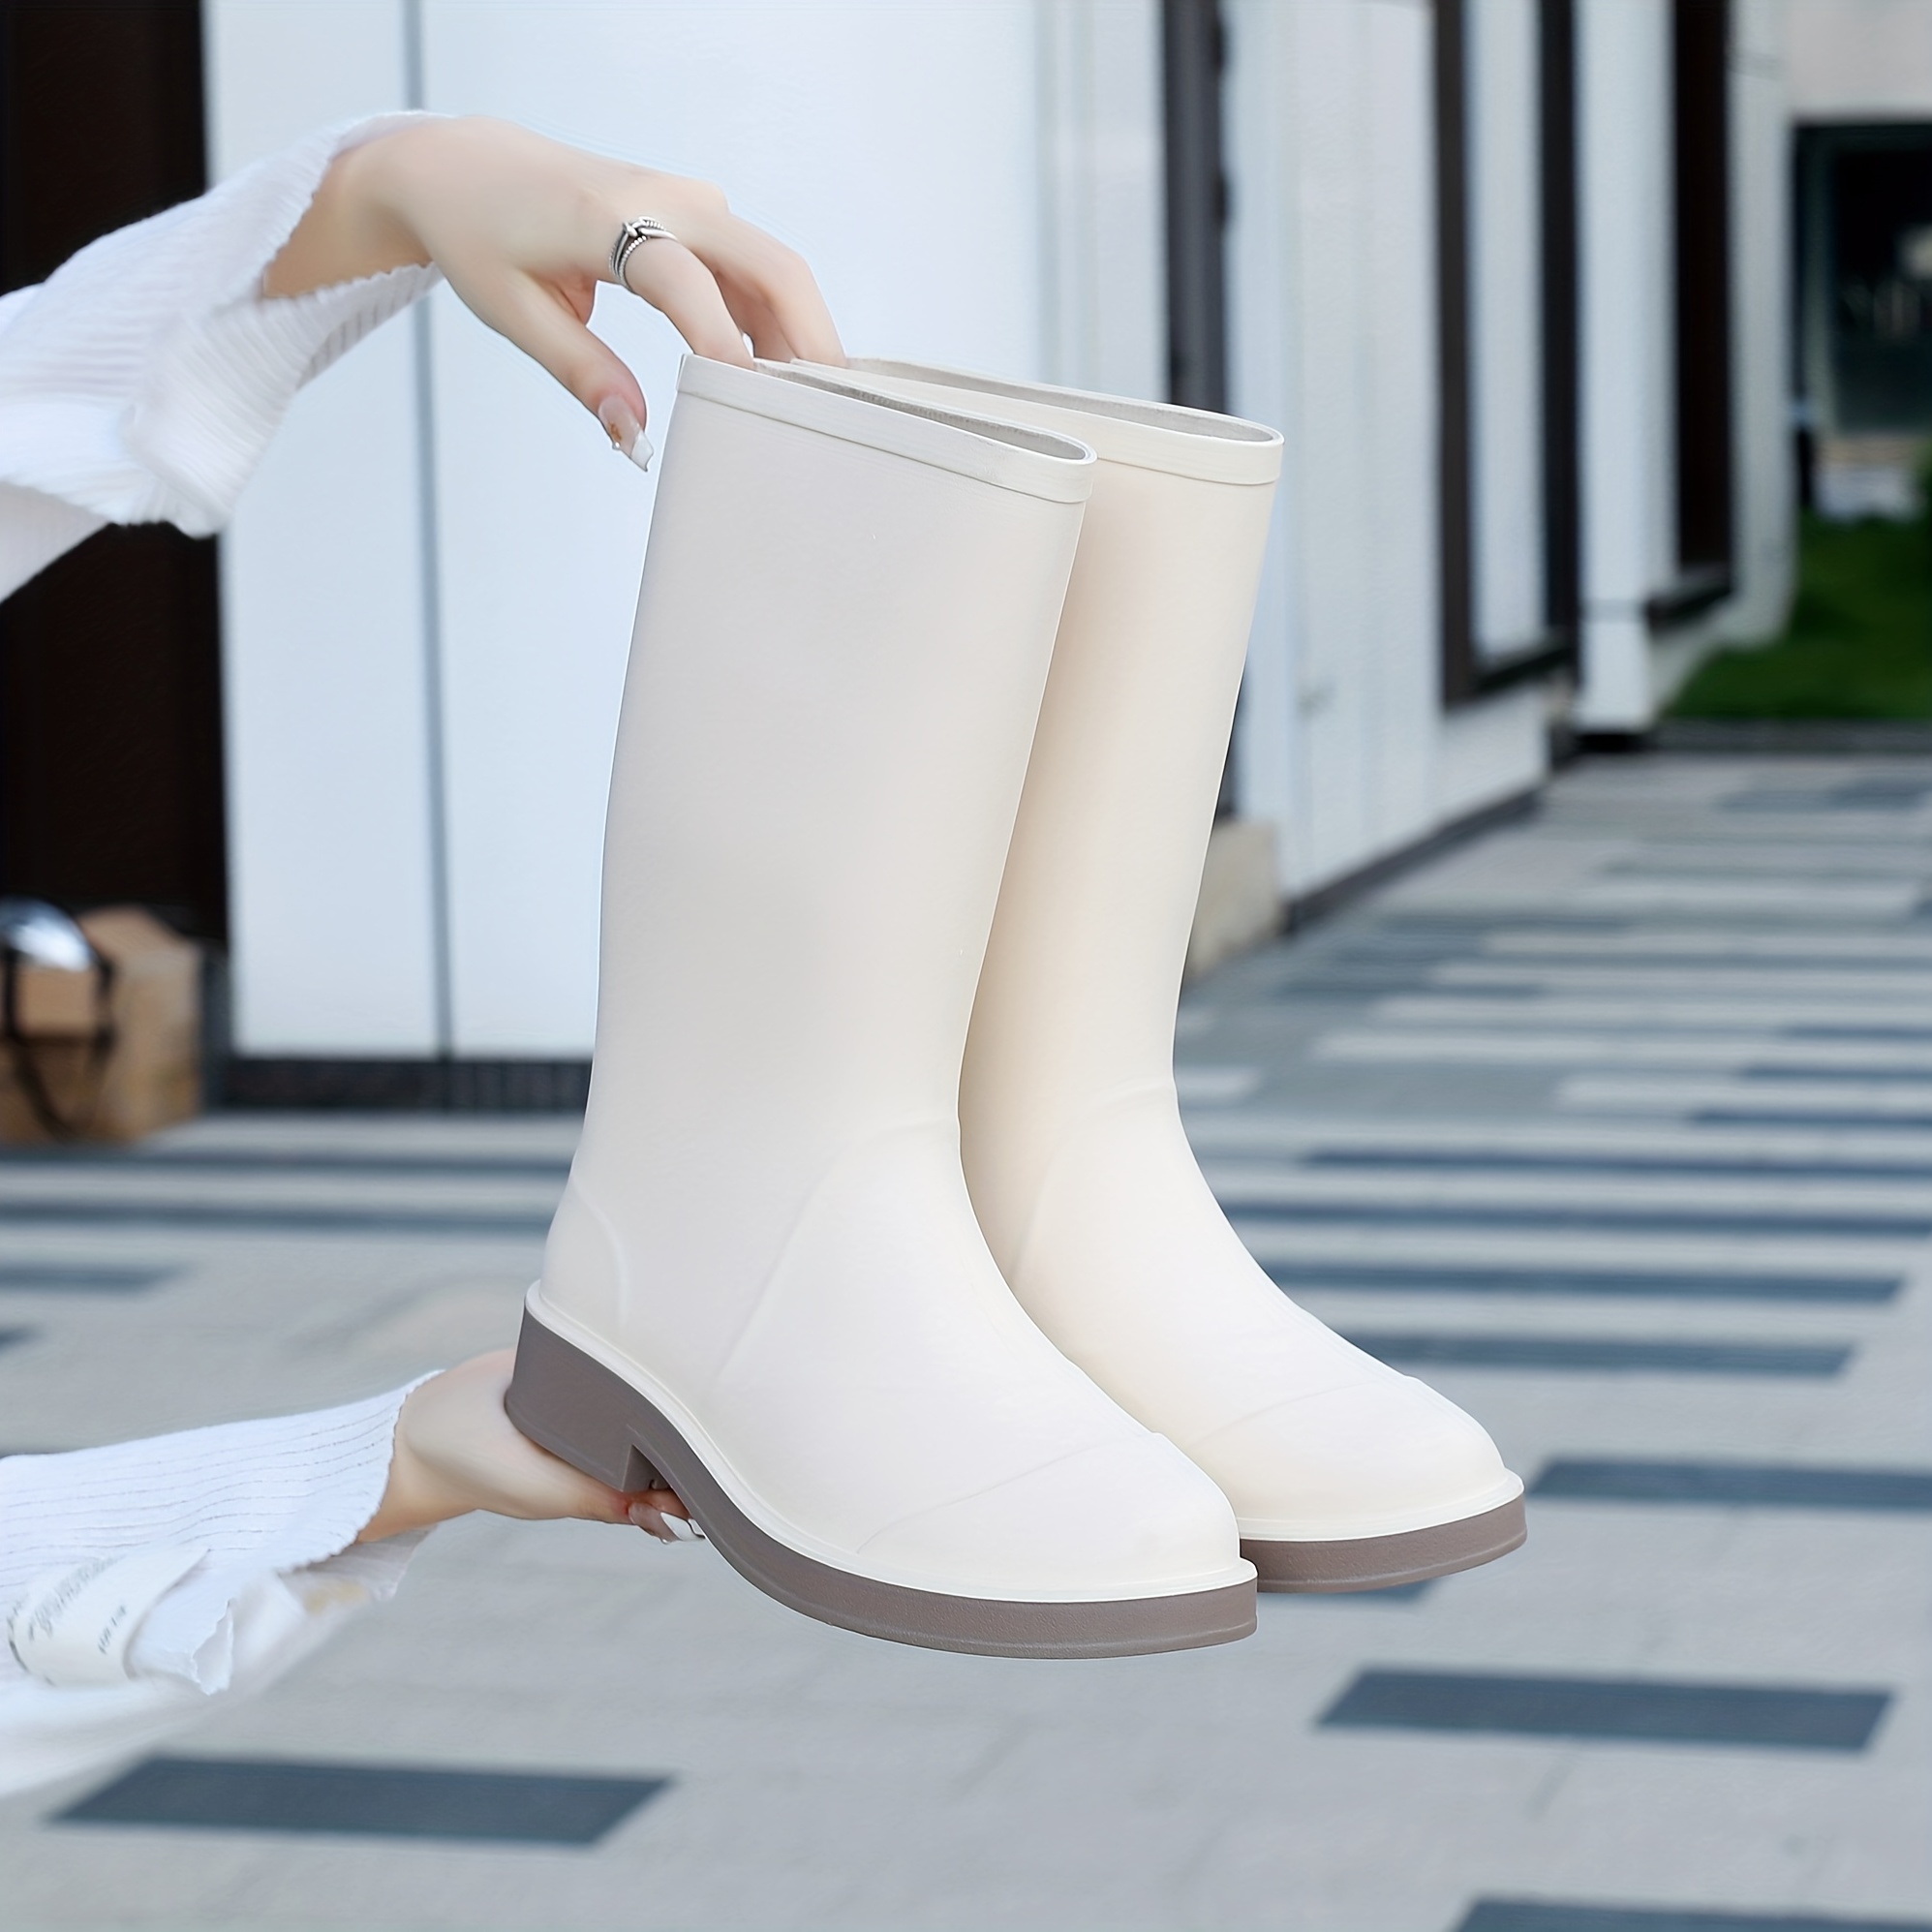 Botas de lluvia de tubo medio para mujer Zapatos impermeables Cubrezapatos  Zapatos de trabajo de cocina